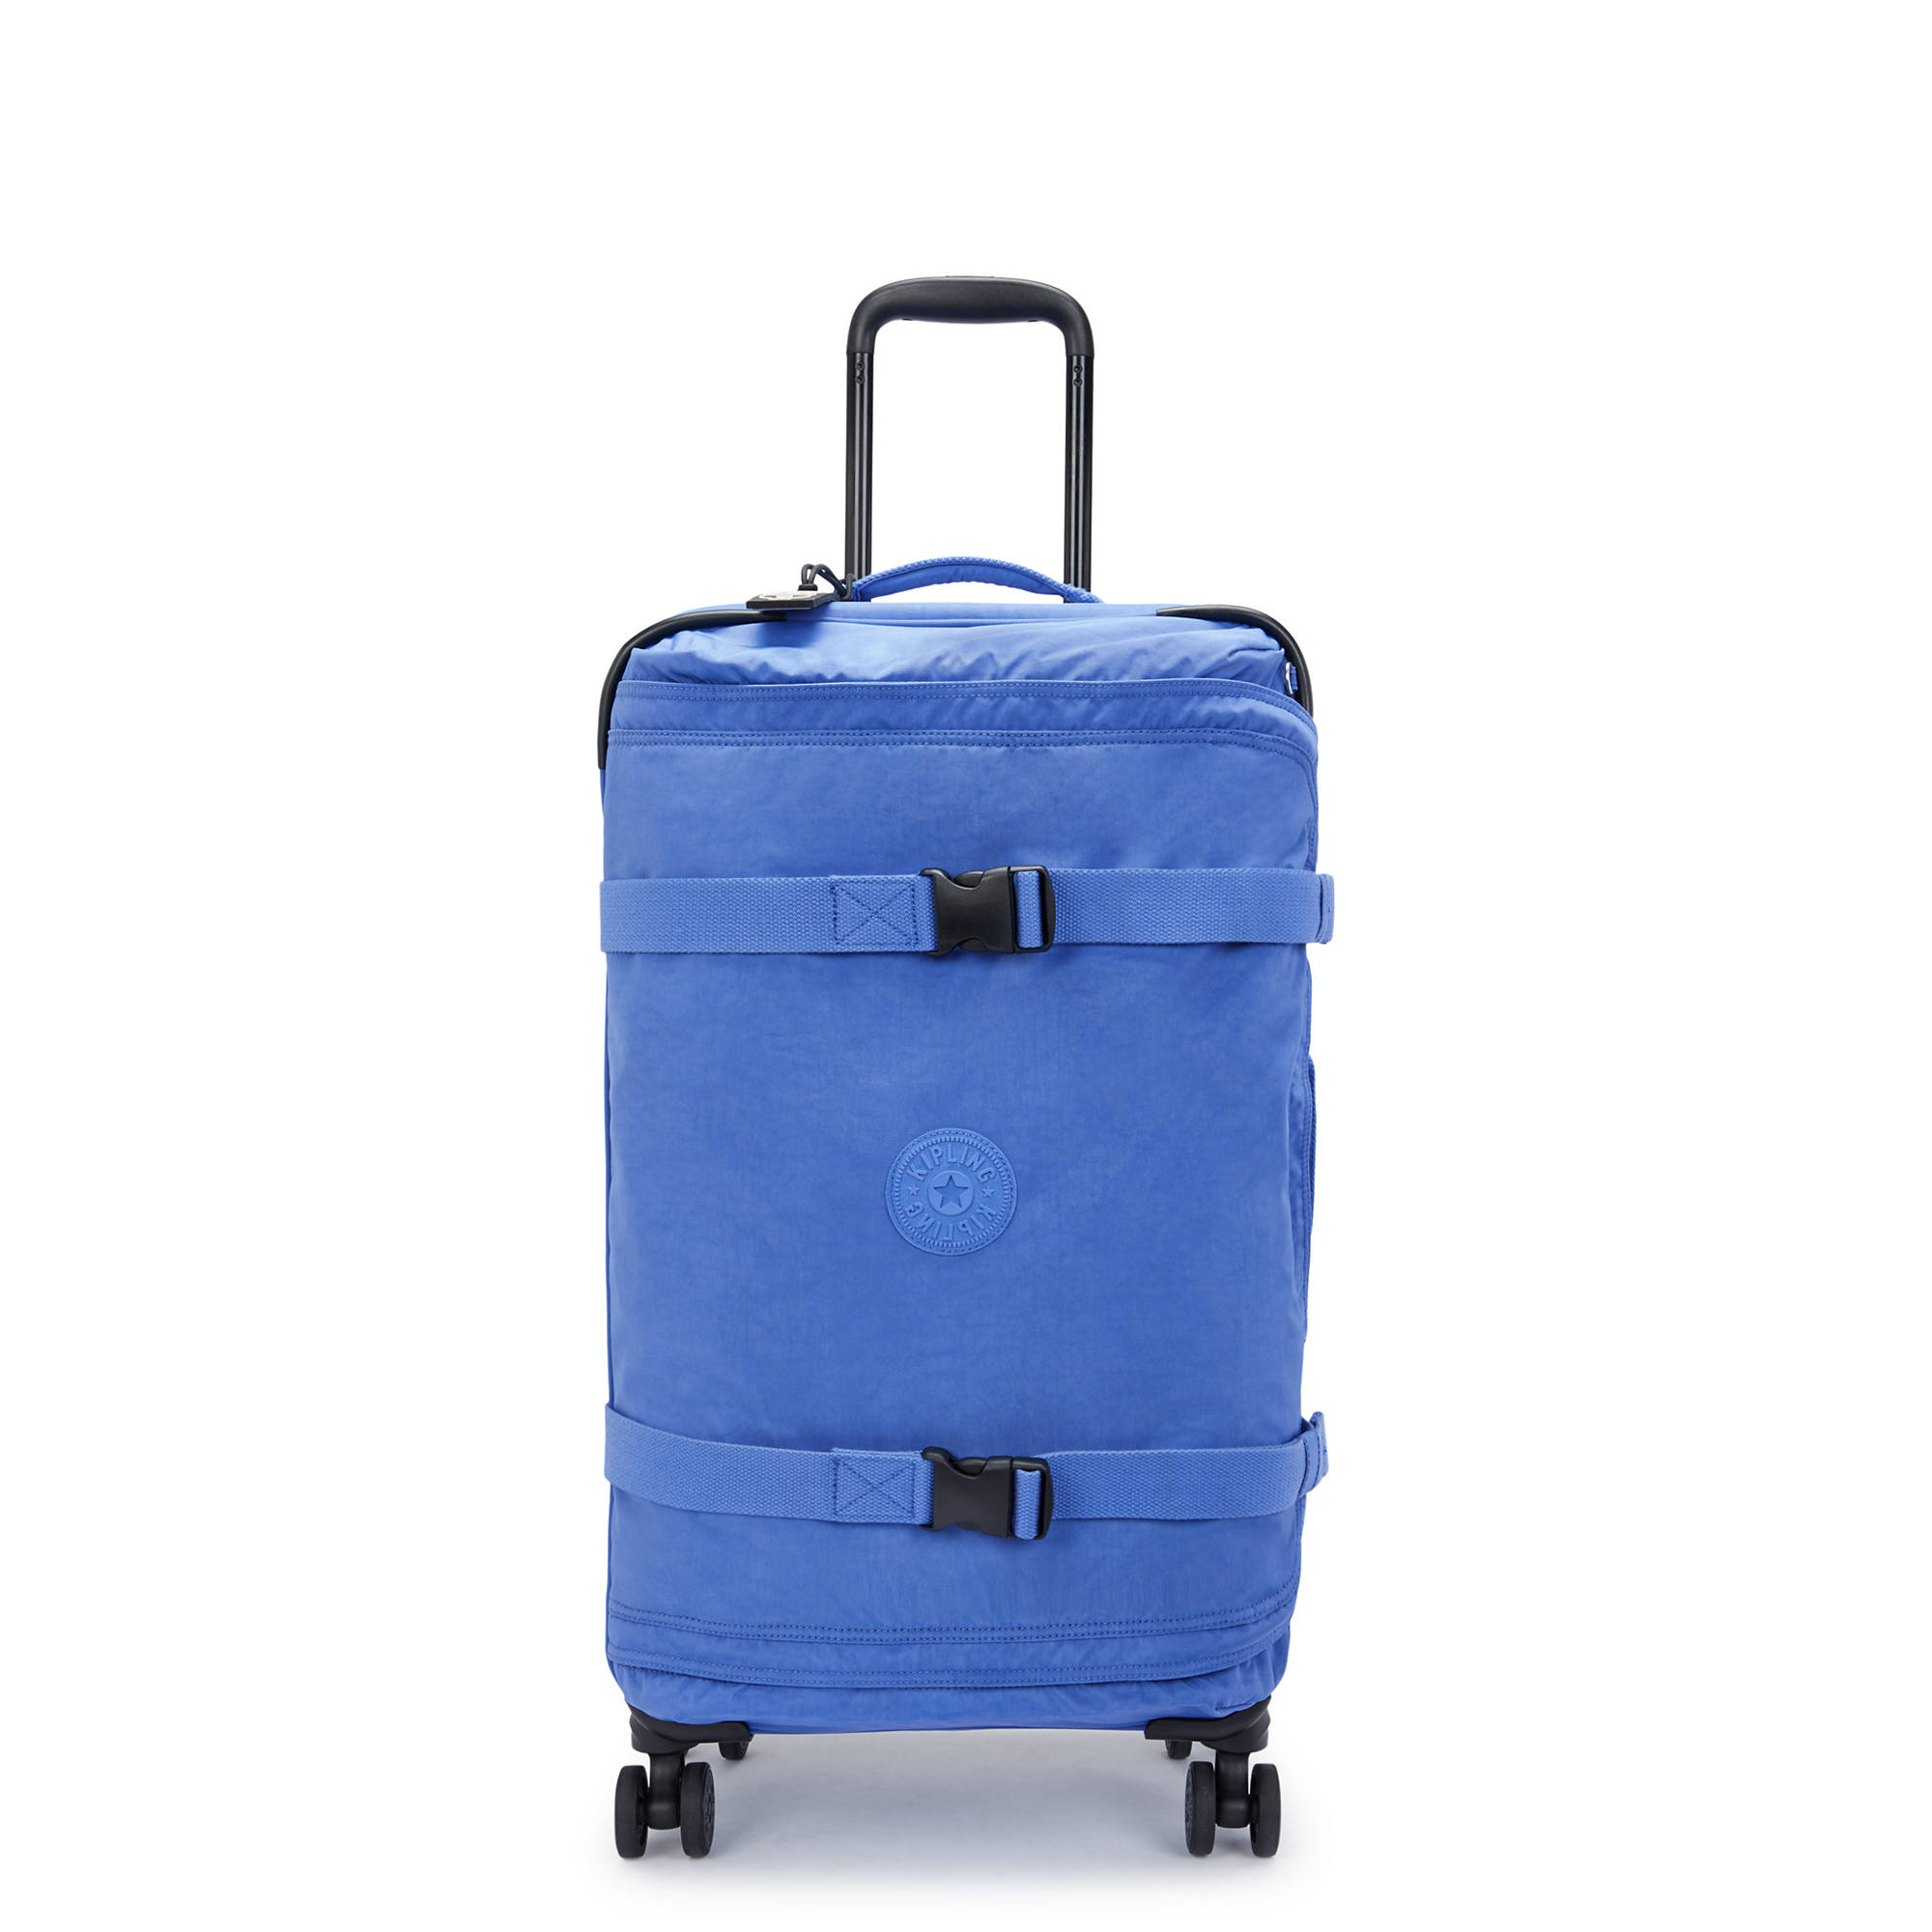 Kipling Spontaneous Medium Rolling Luggage Havana Blue